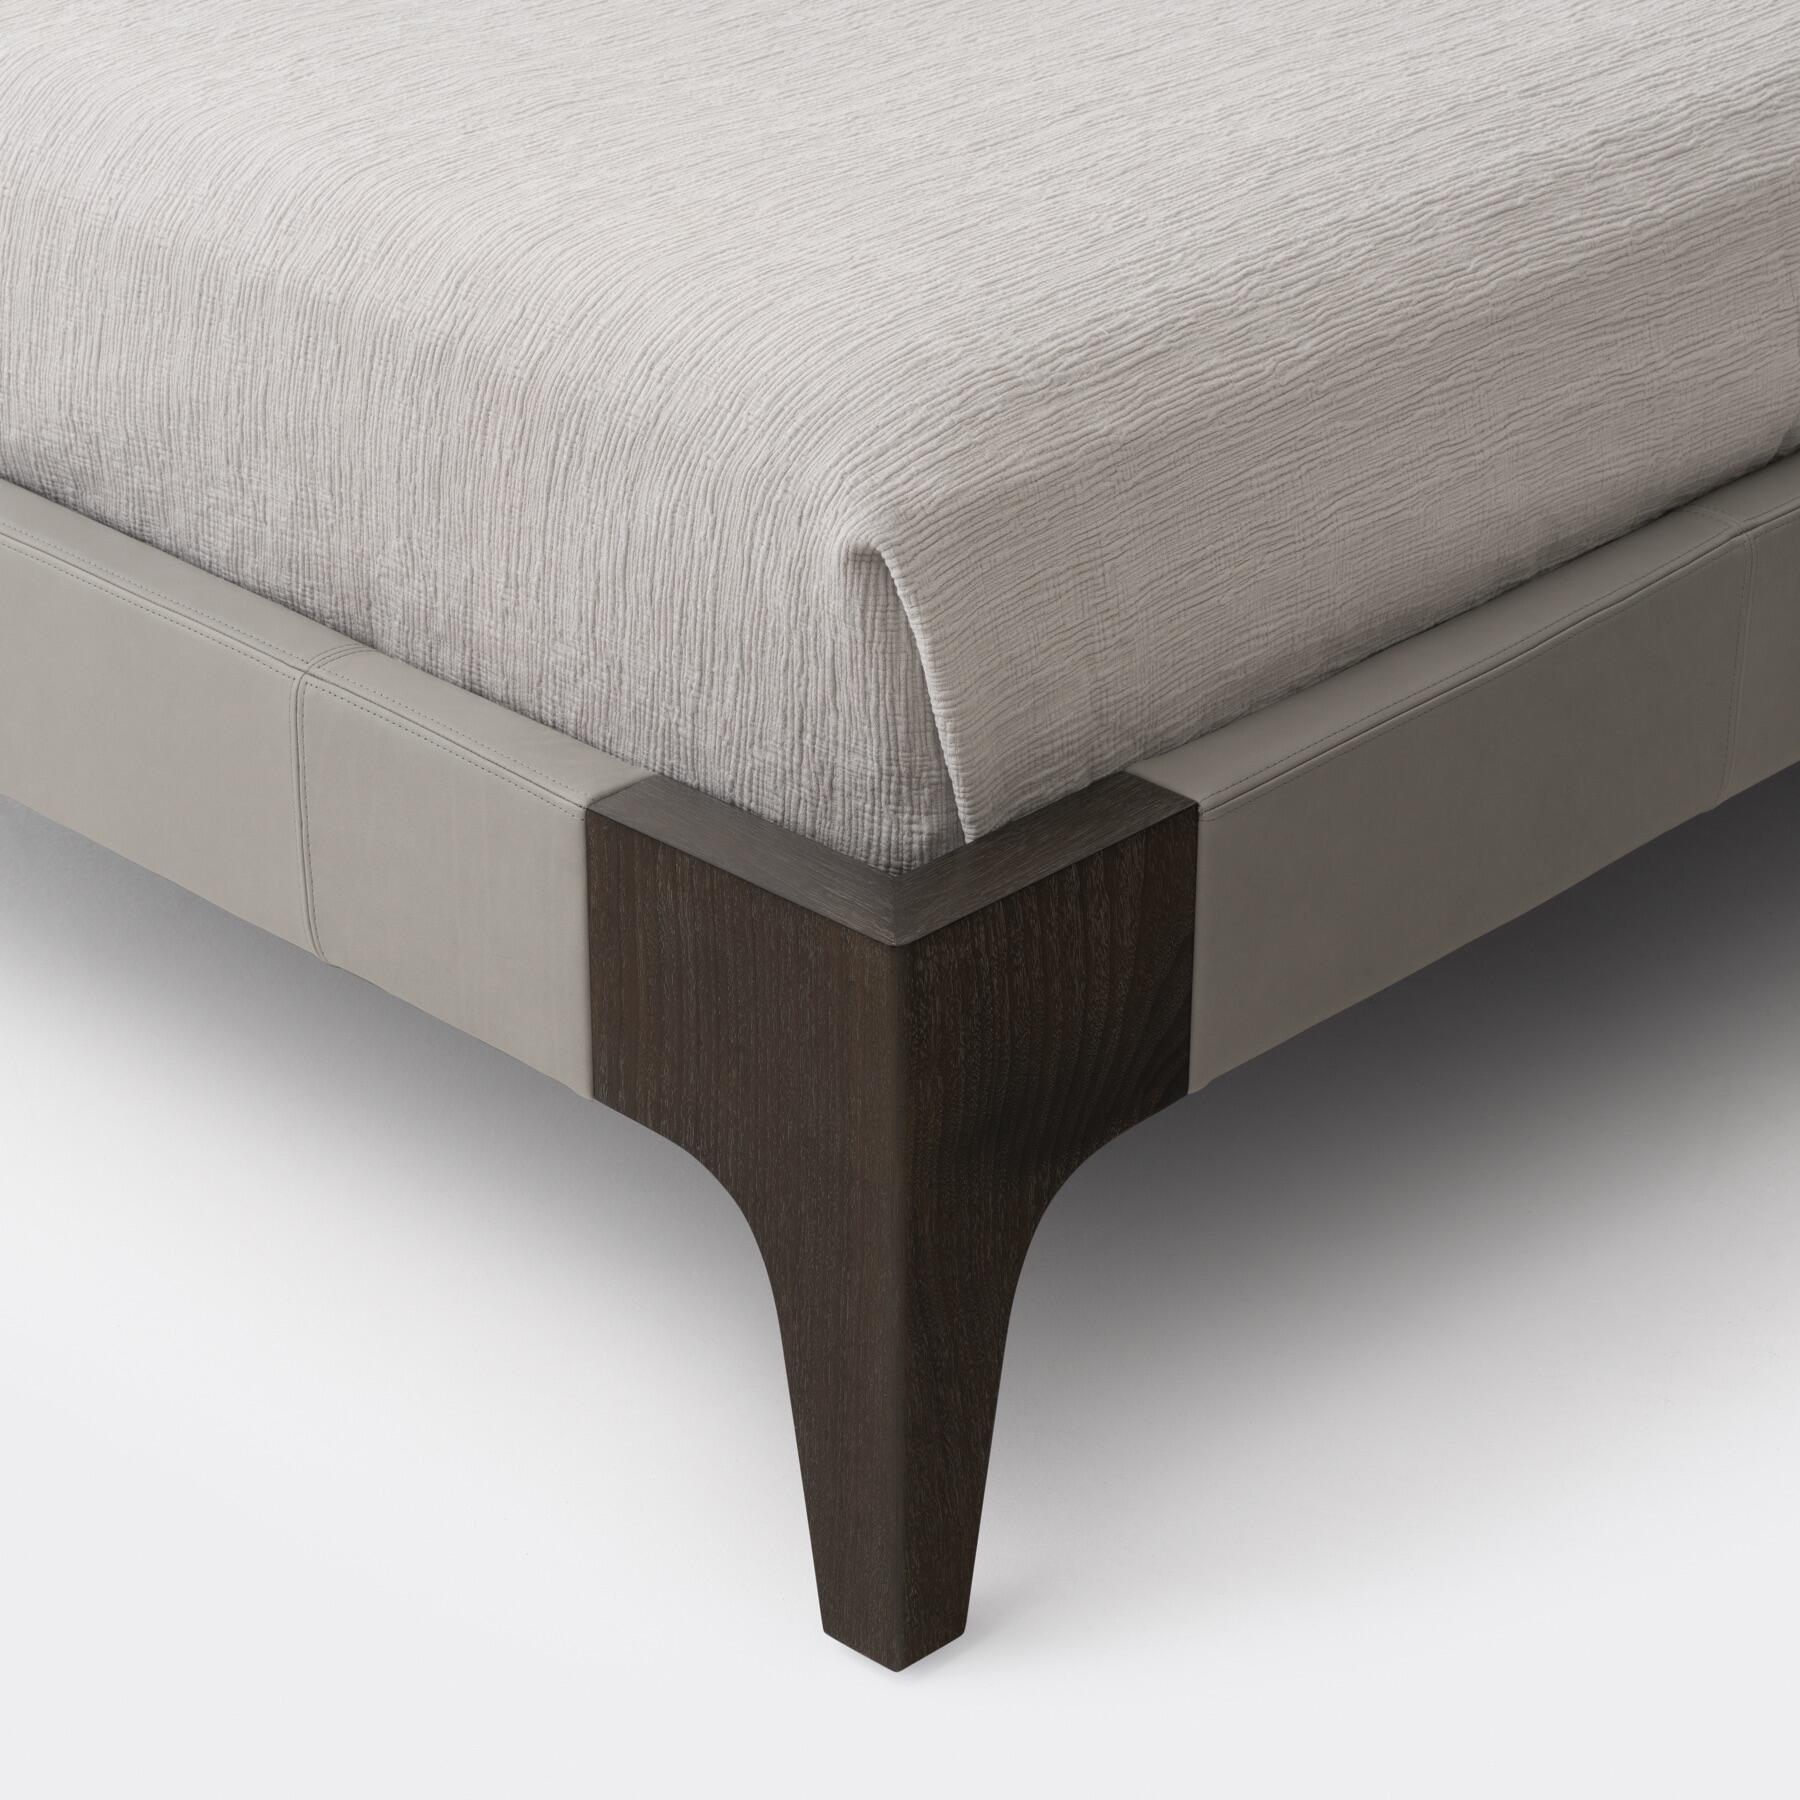 Archway Bed, Walnut Puma, Florence: Perfect Grey